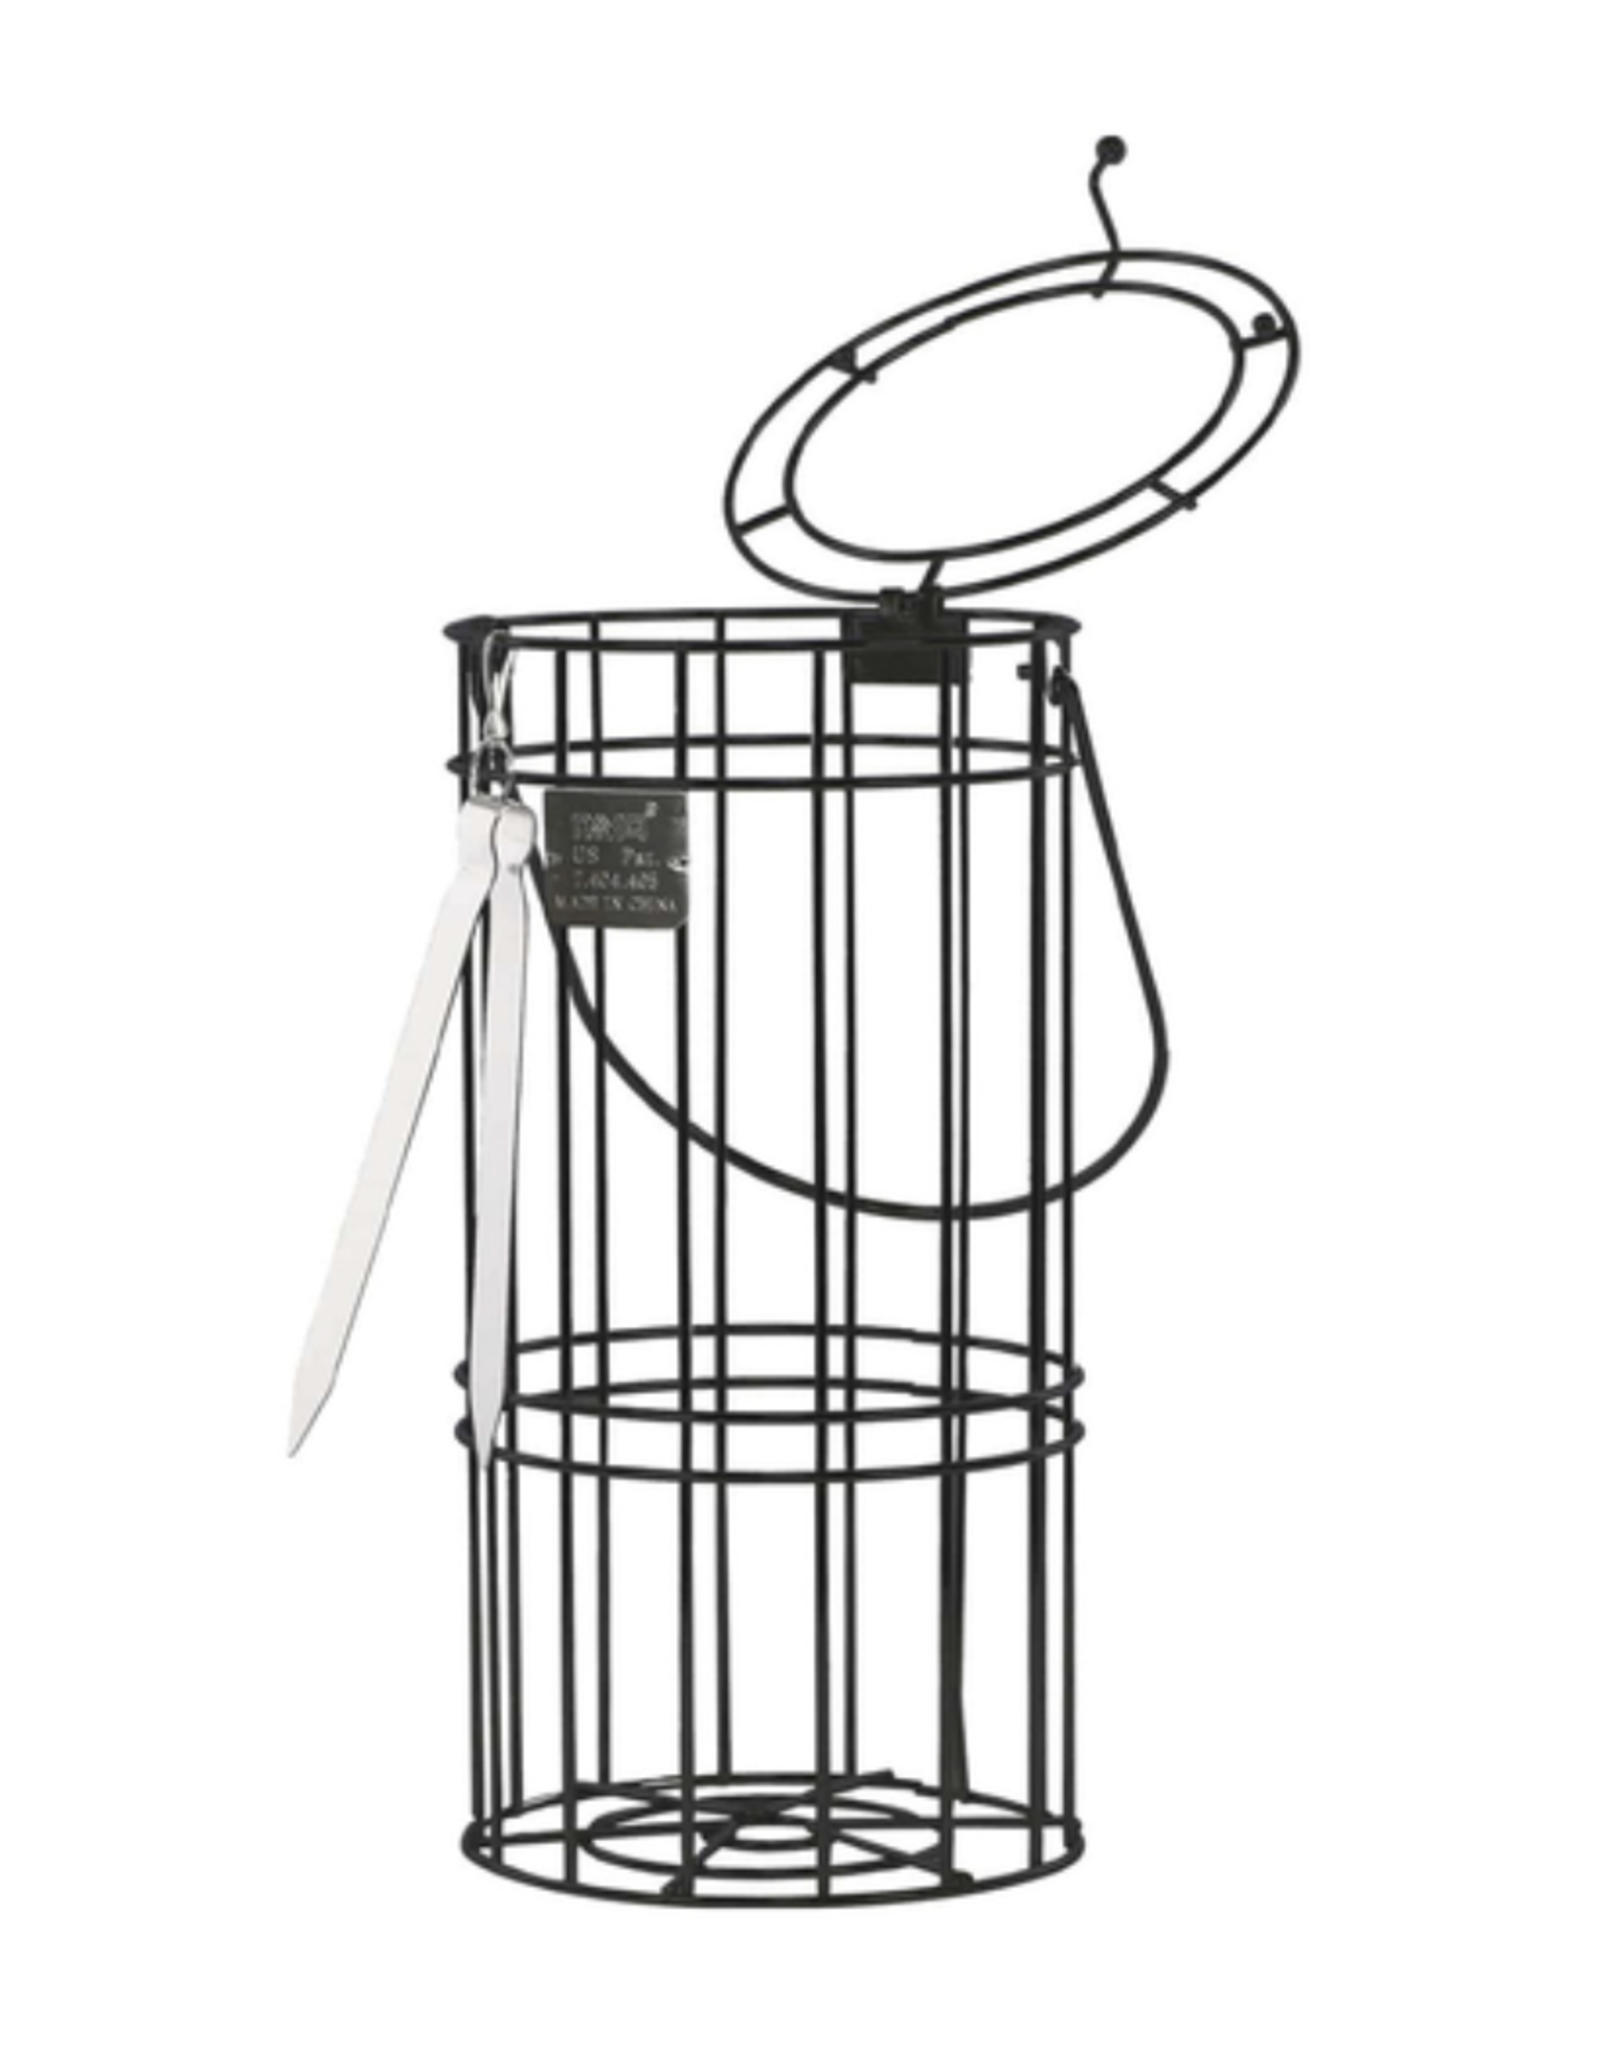 MYA Econo-QT 1-Hose Hookah Chrome Hookah Set in Wire Basket - Assorted Colours